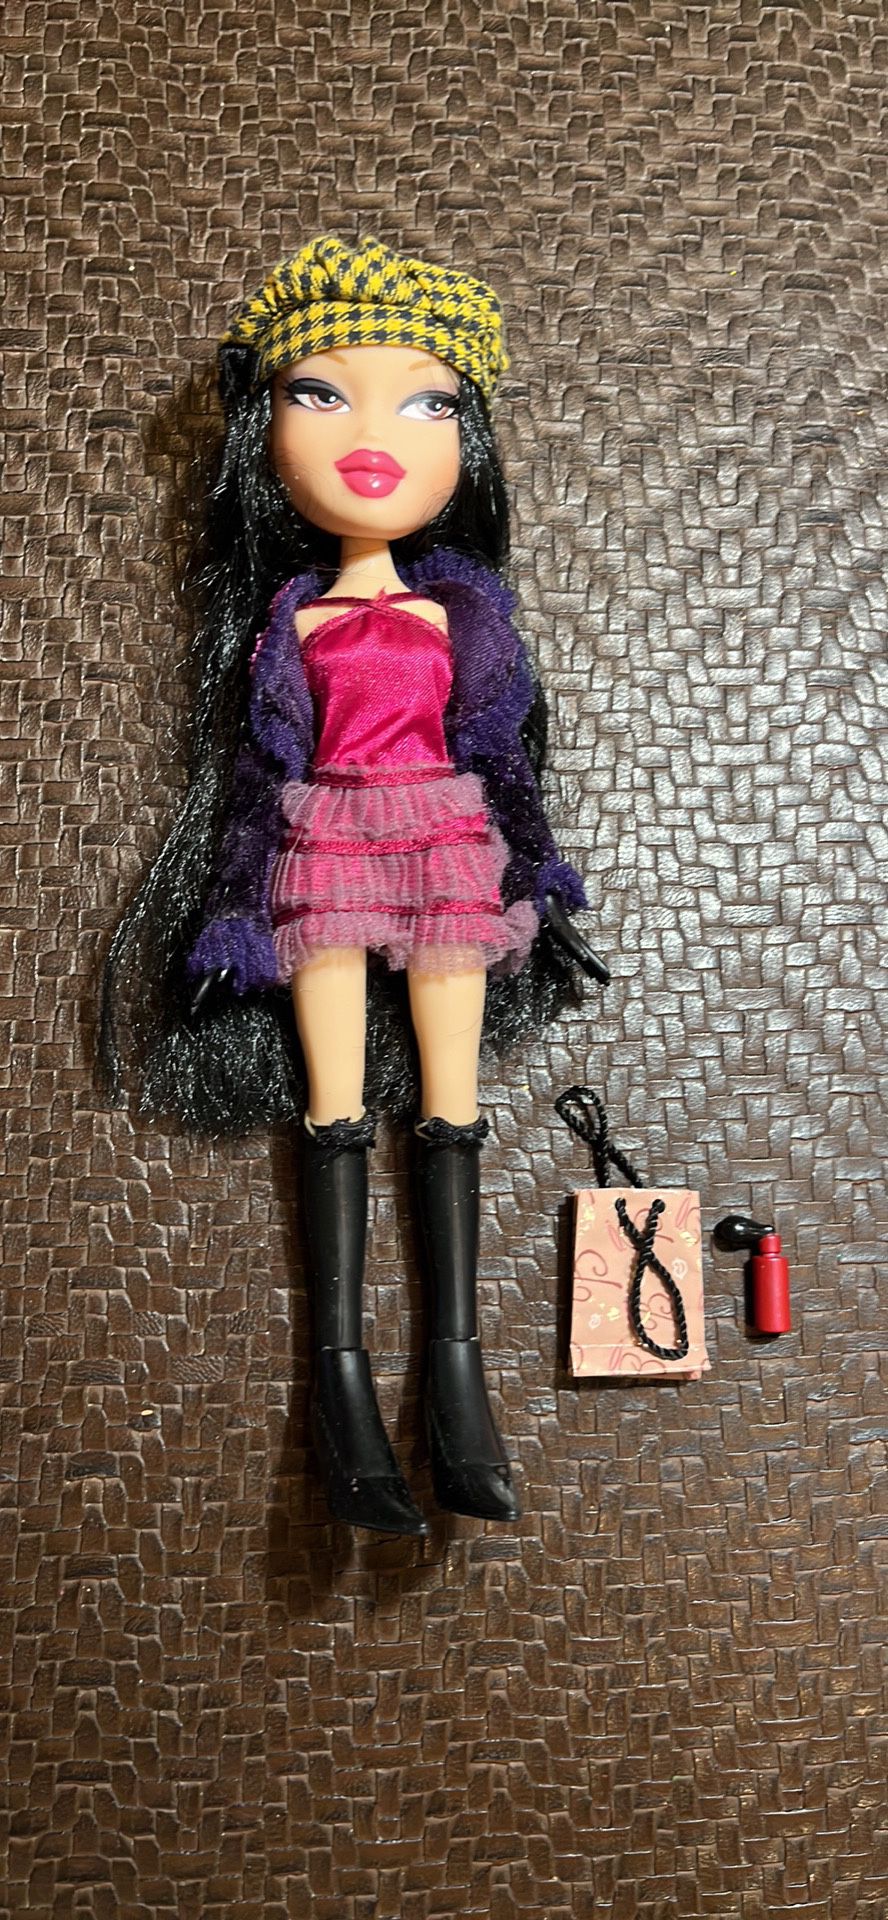 Bratz OOH LA LA  KUMI Fashion Doll, 2005, Original Release